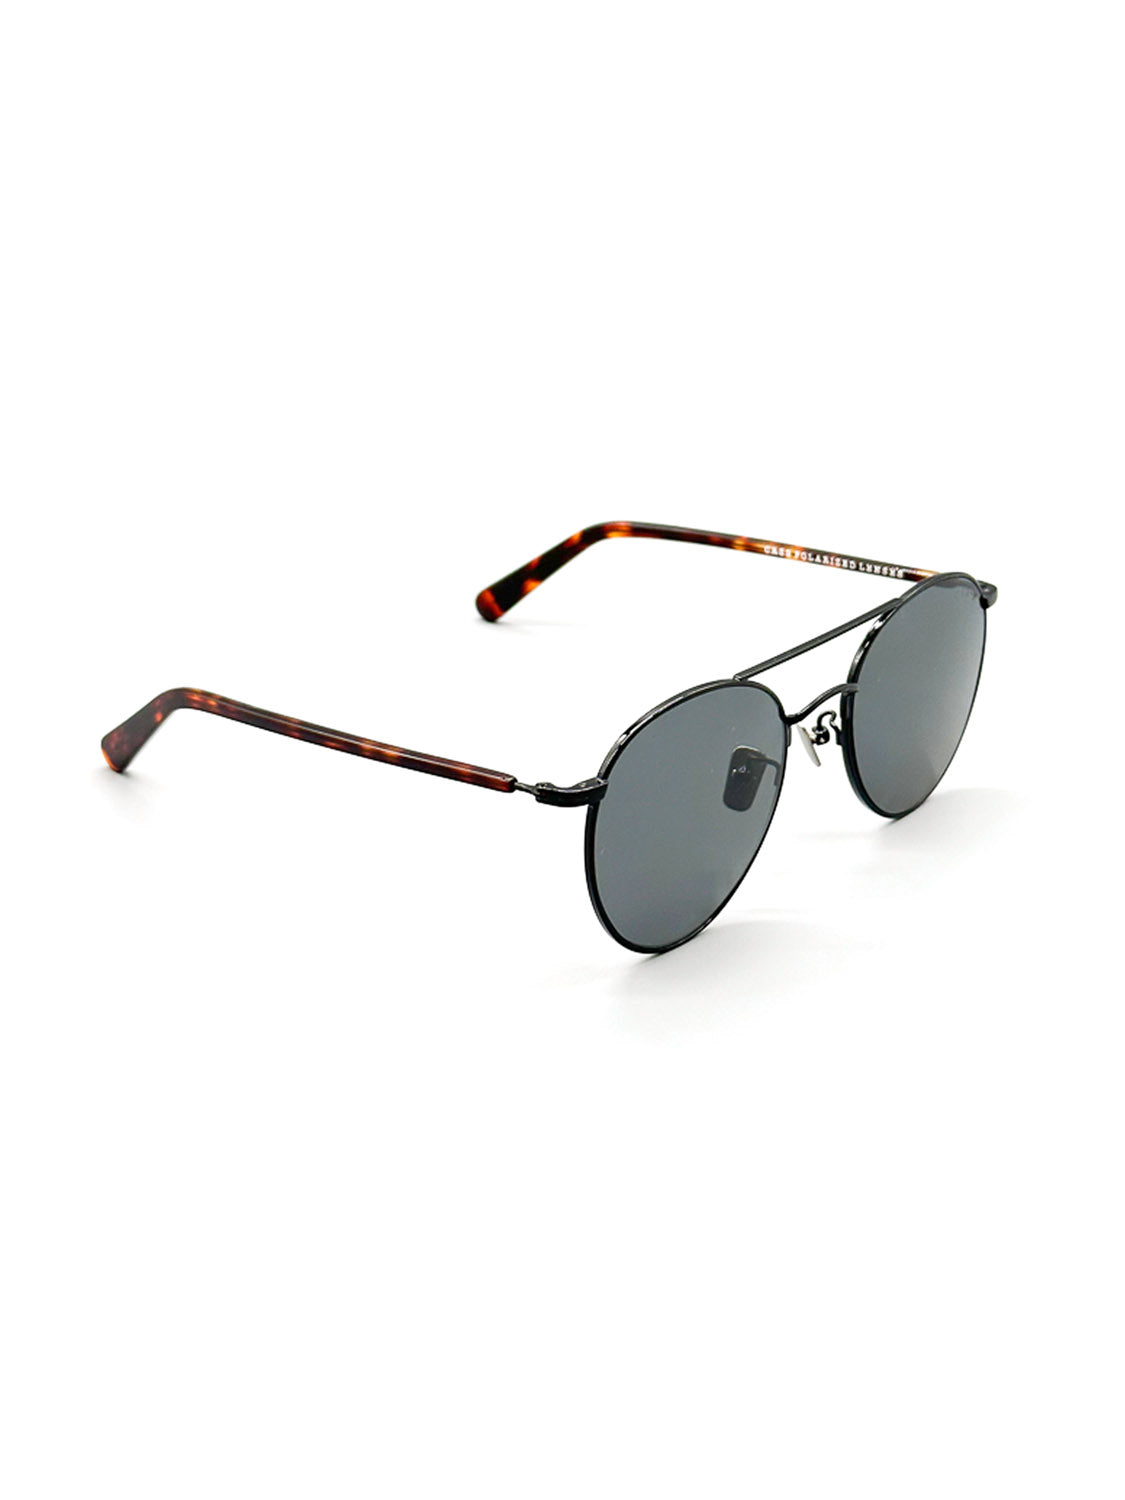 M433GY Polarized Sunglasses